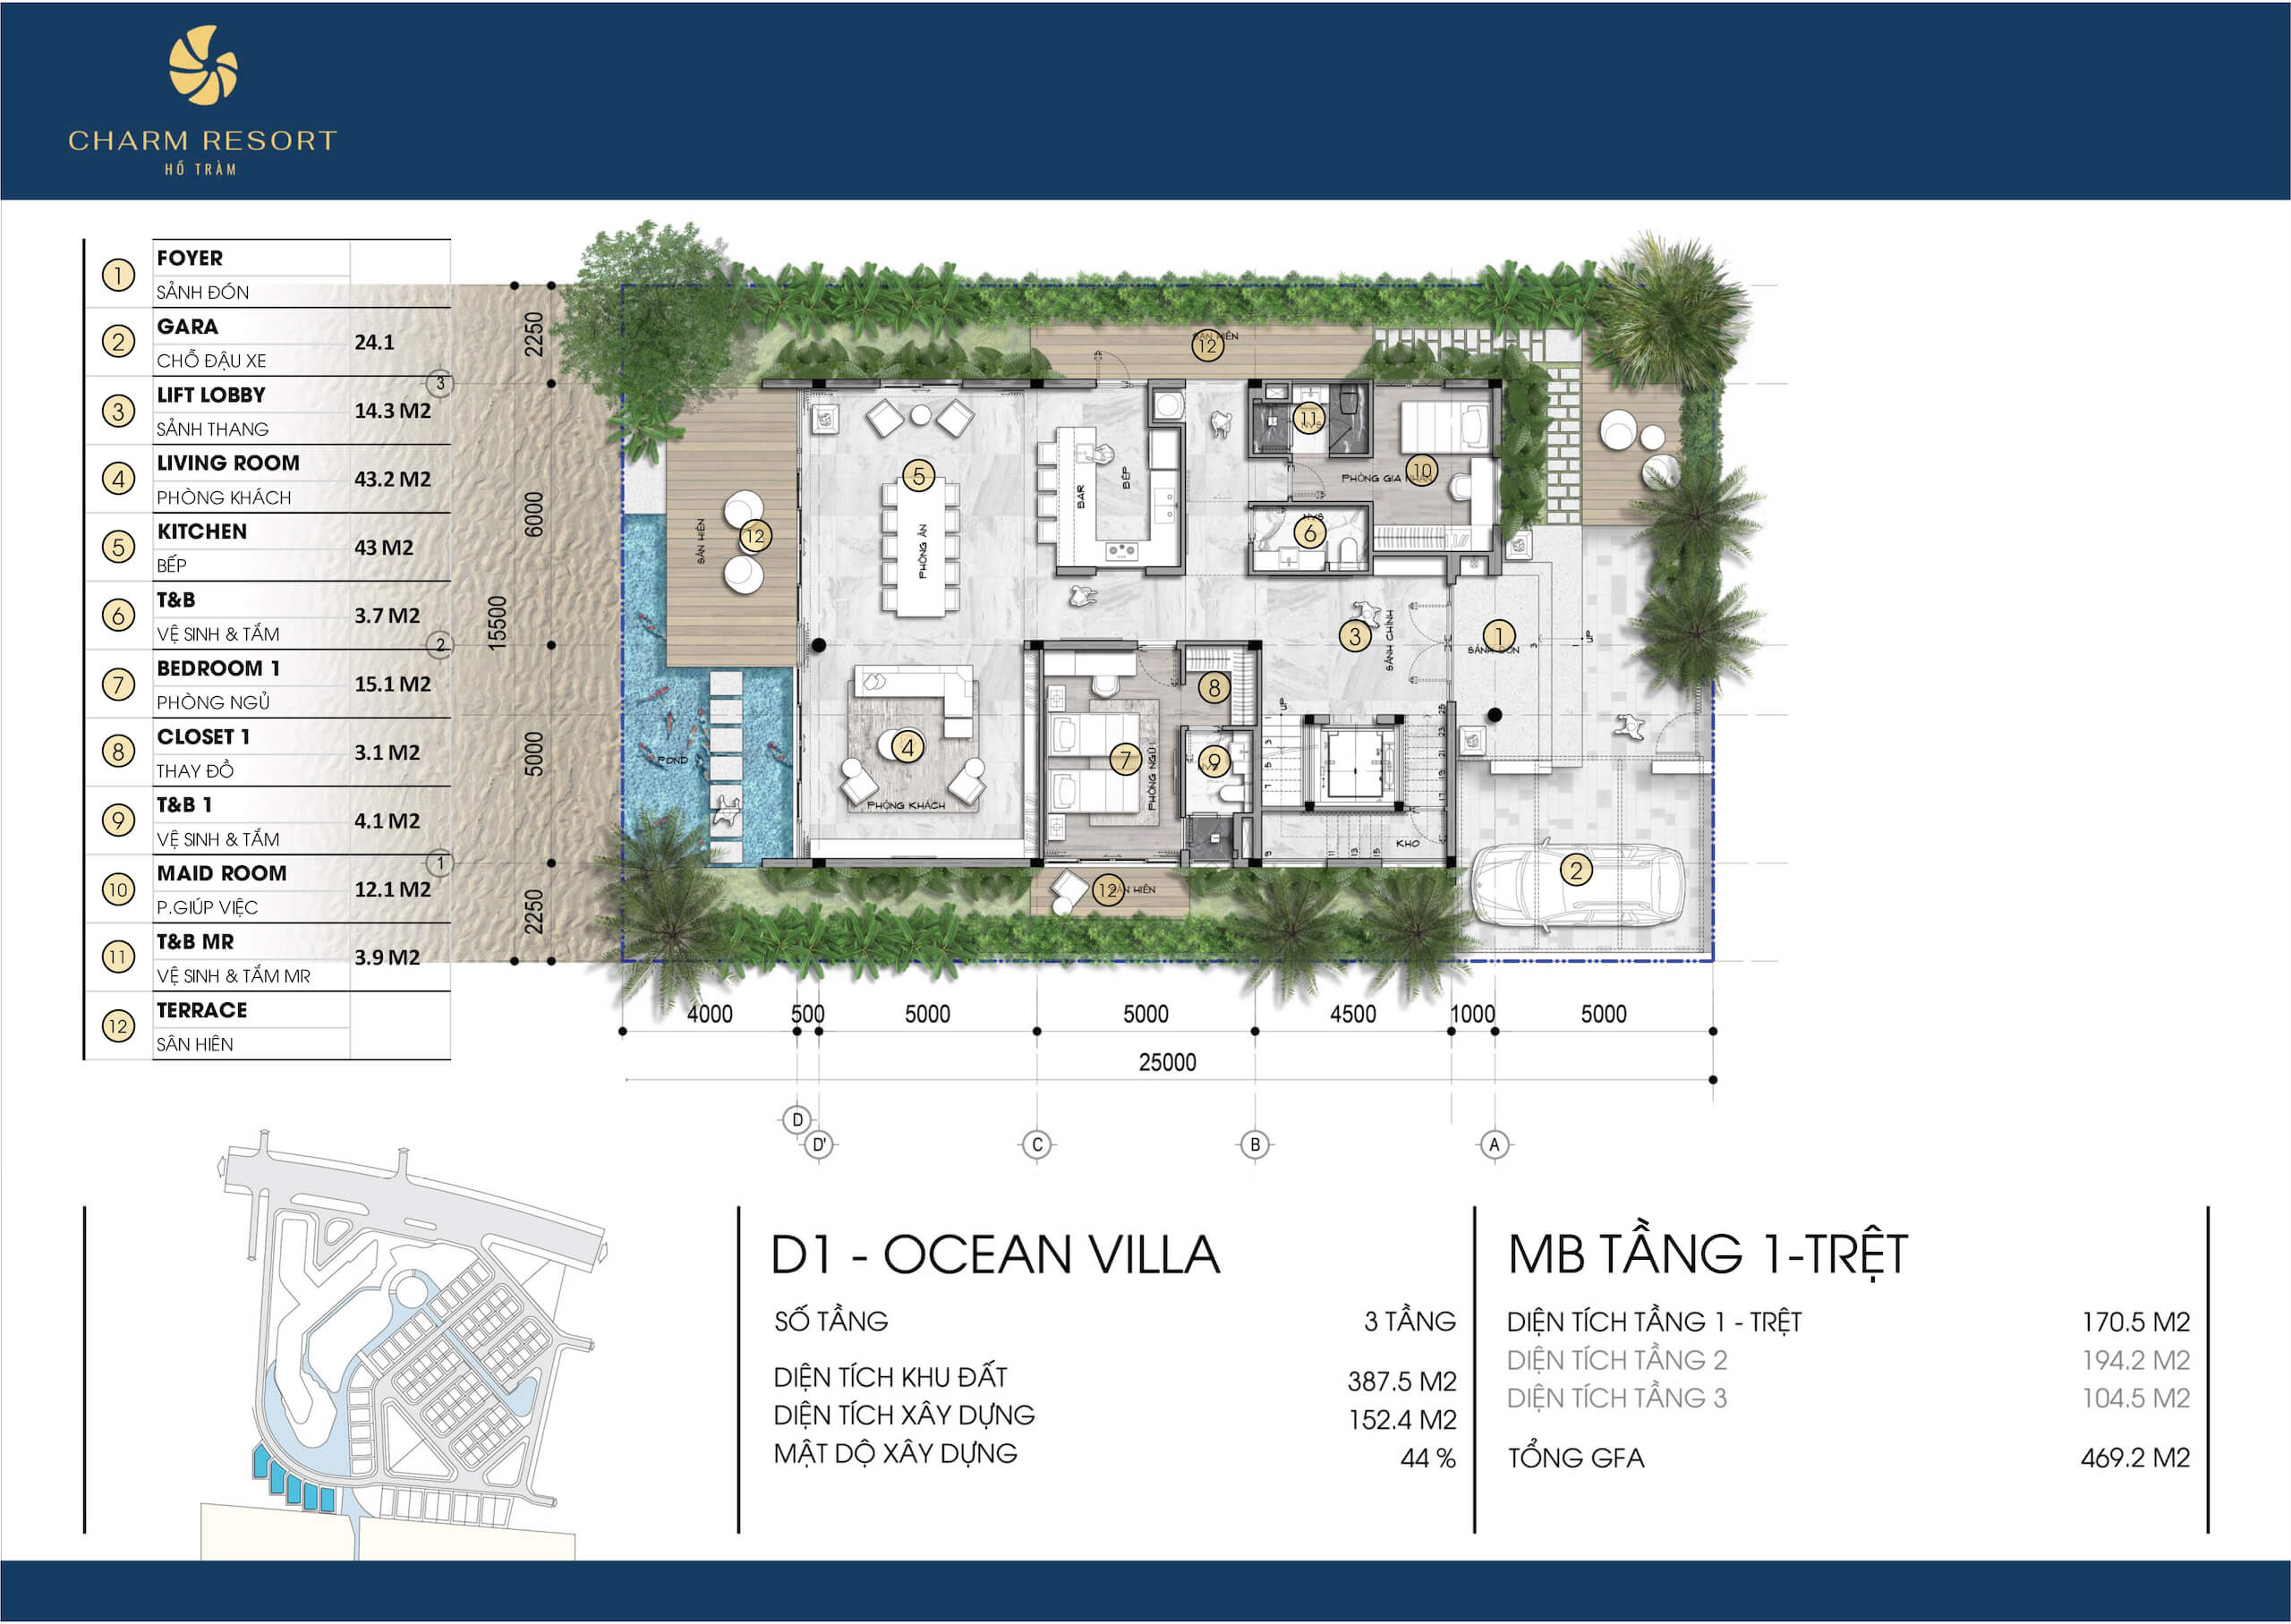 Mặt bằng layout Ocean Villa Charm Resort Hồ Tràm